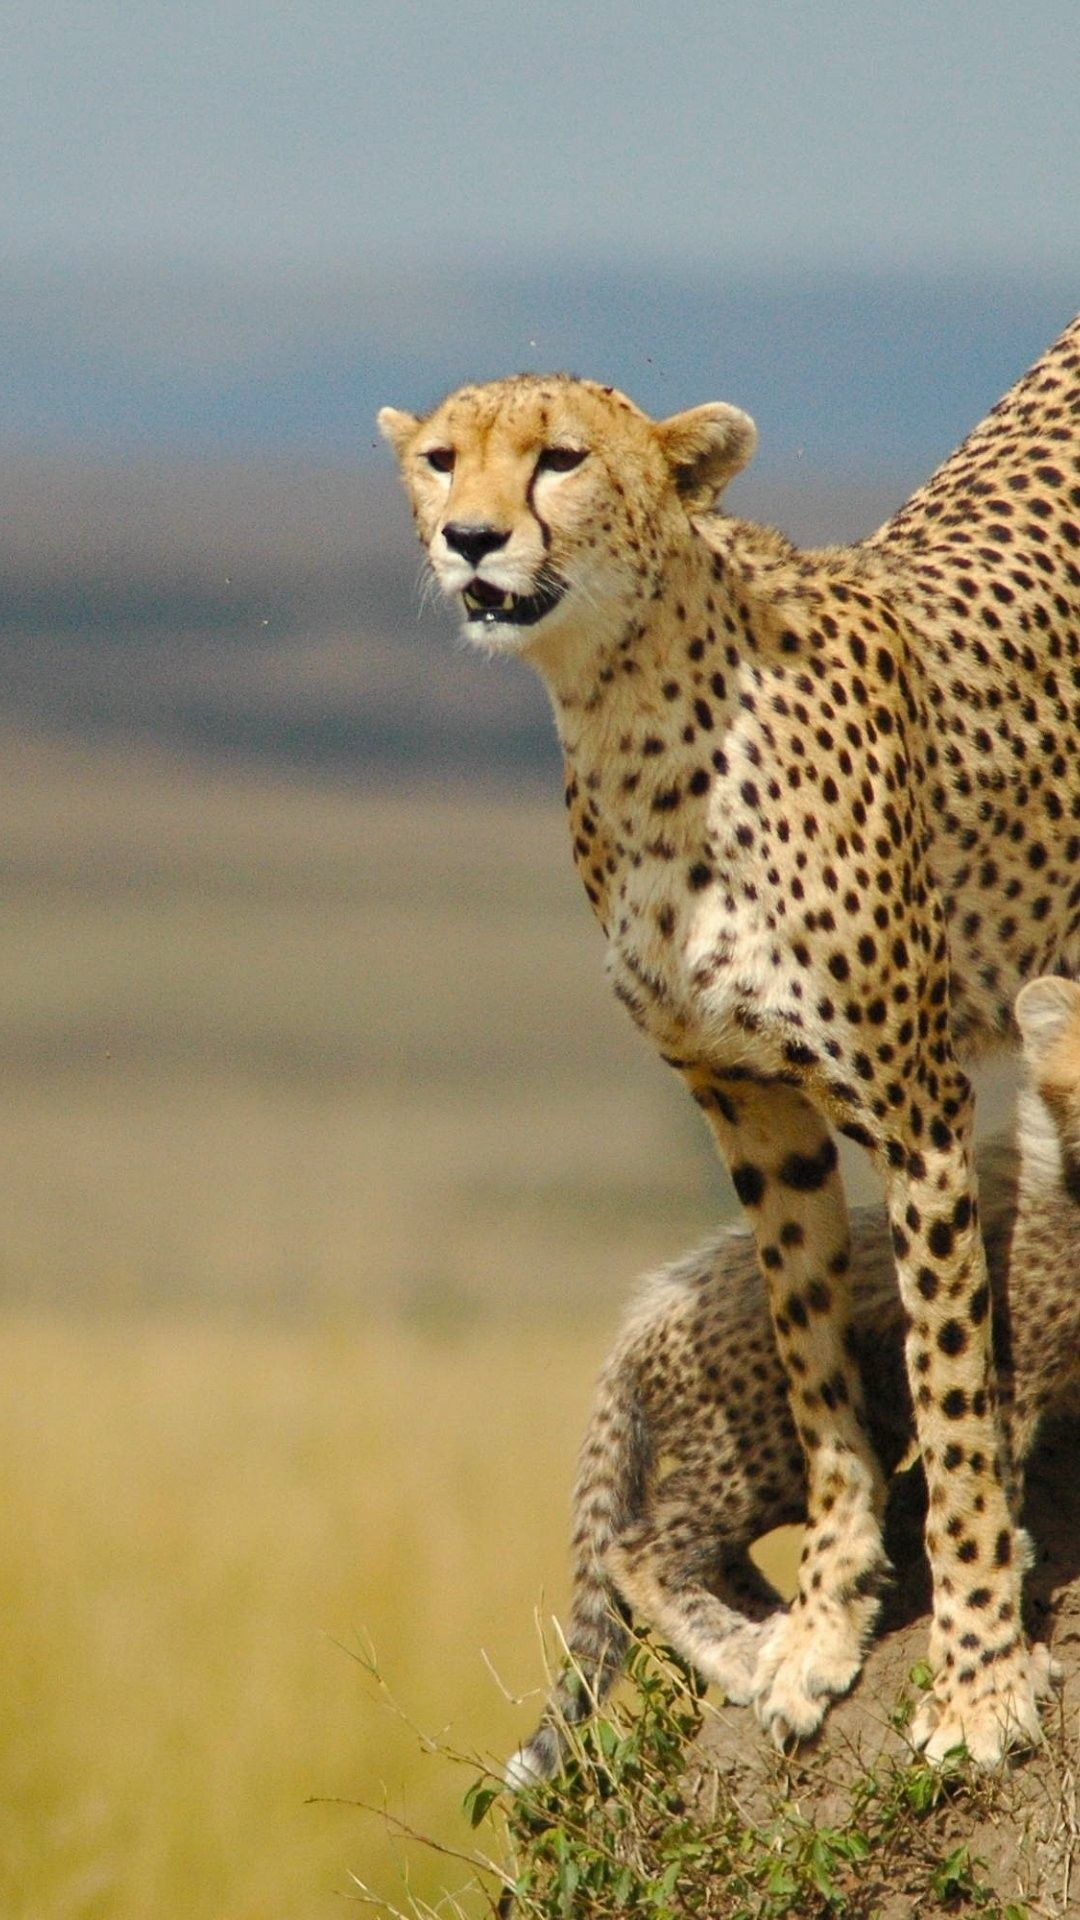 1080x1920 Cheetah iPhone 6 Plus Wallpaper 10428 - Animals iPhone 6 Plus Wallpapers  #Animals #iPhone #6 #Plus #Wallpapers #cheetah